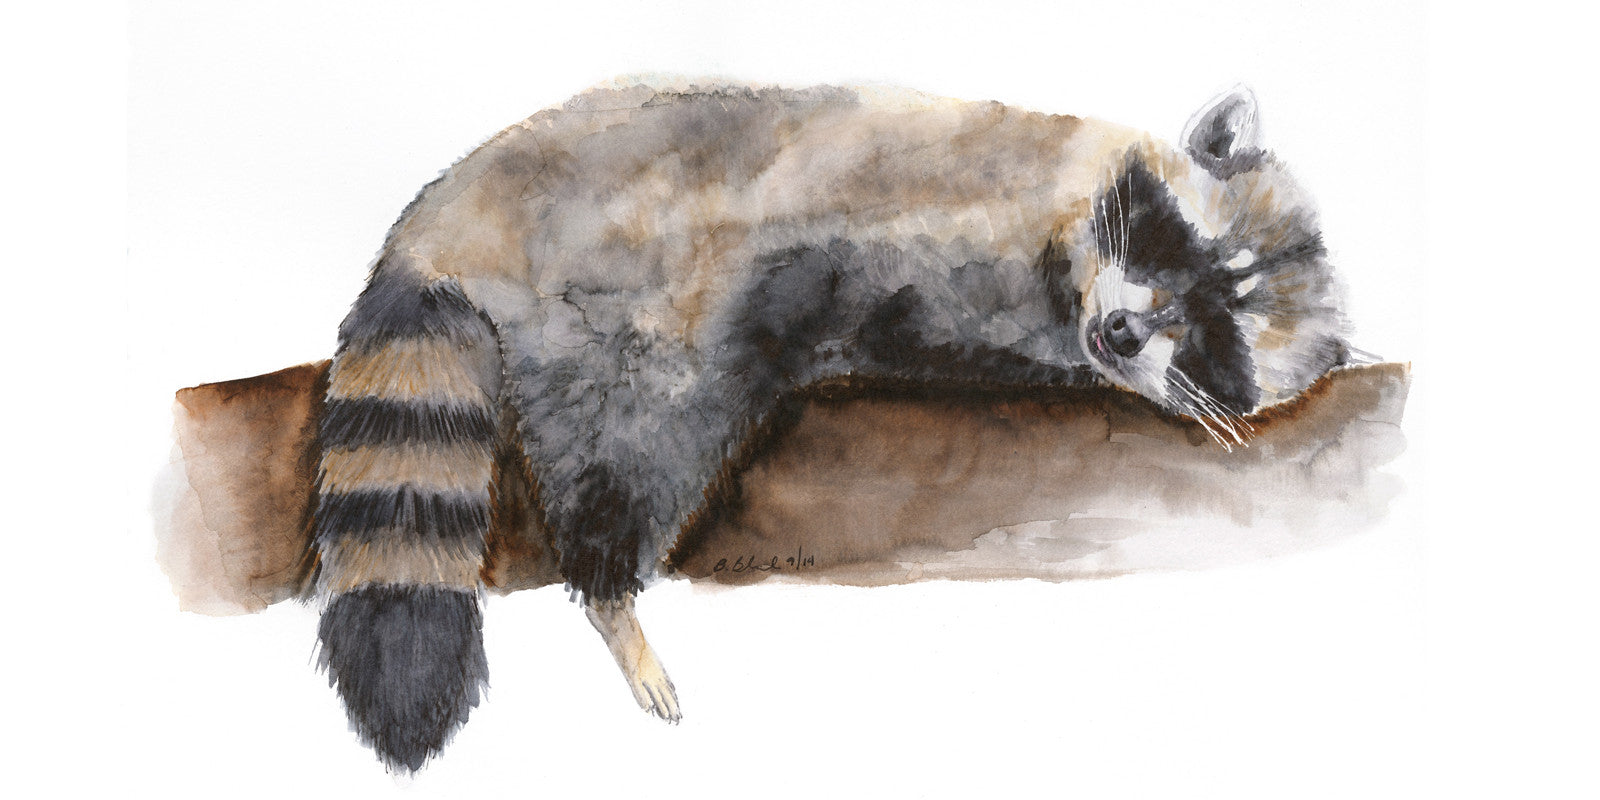 The Raccoon Art Watercolor that Surprised Me